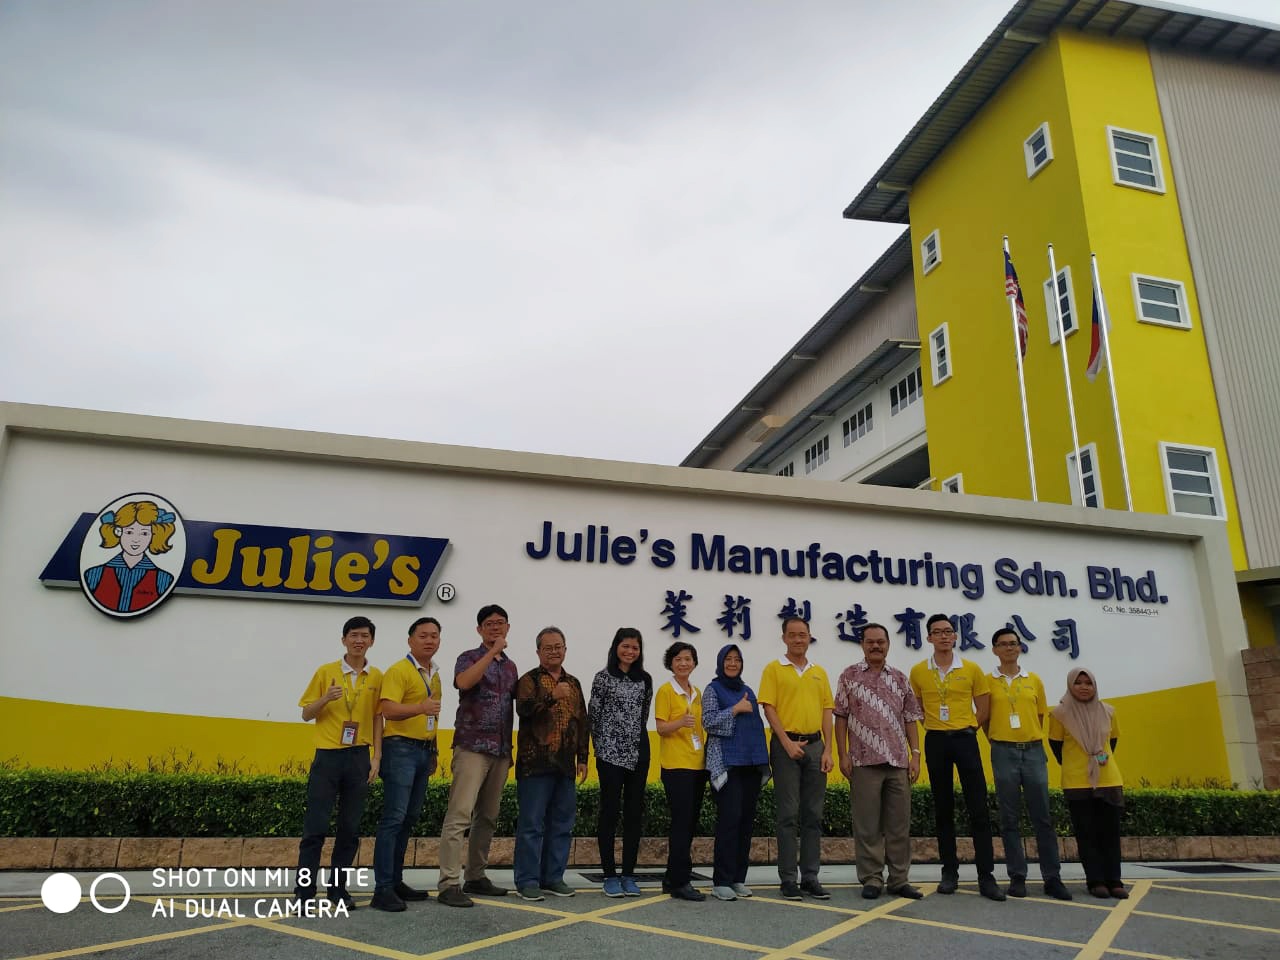 Julie's Manufacturing Sdn.Bhd